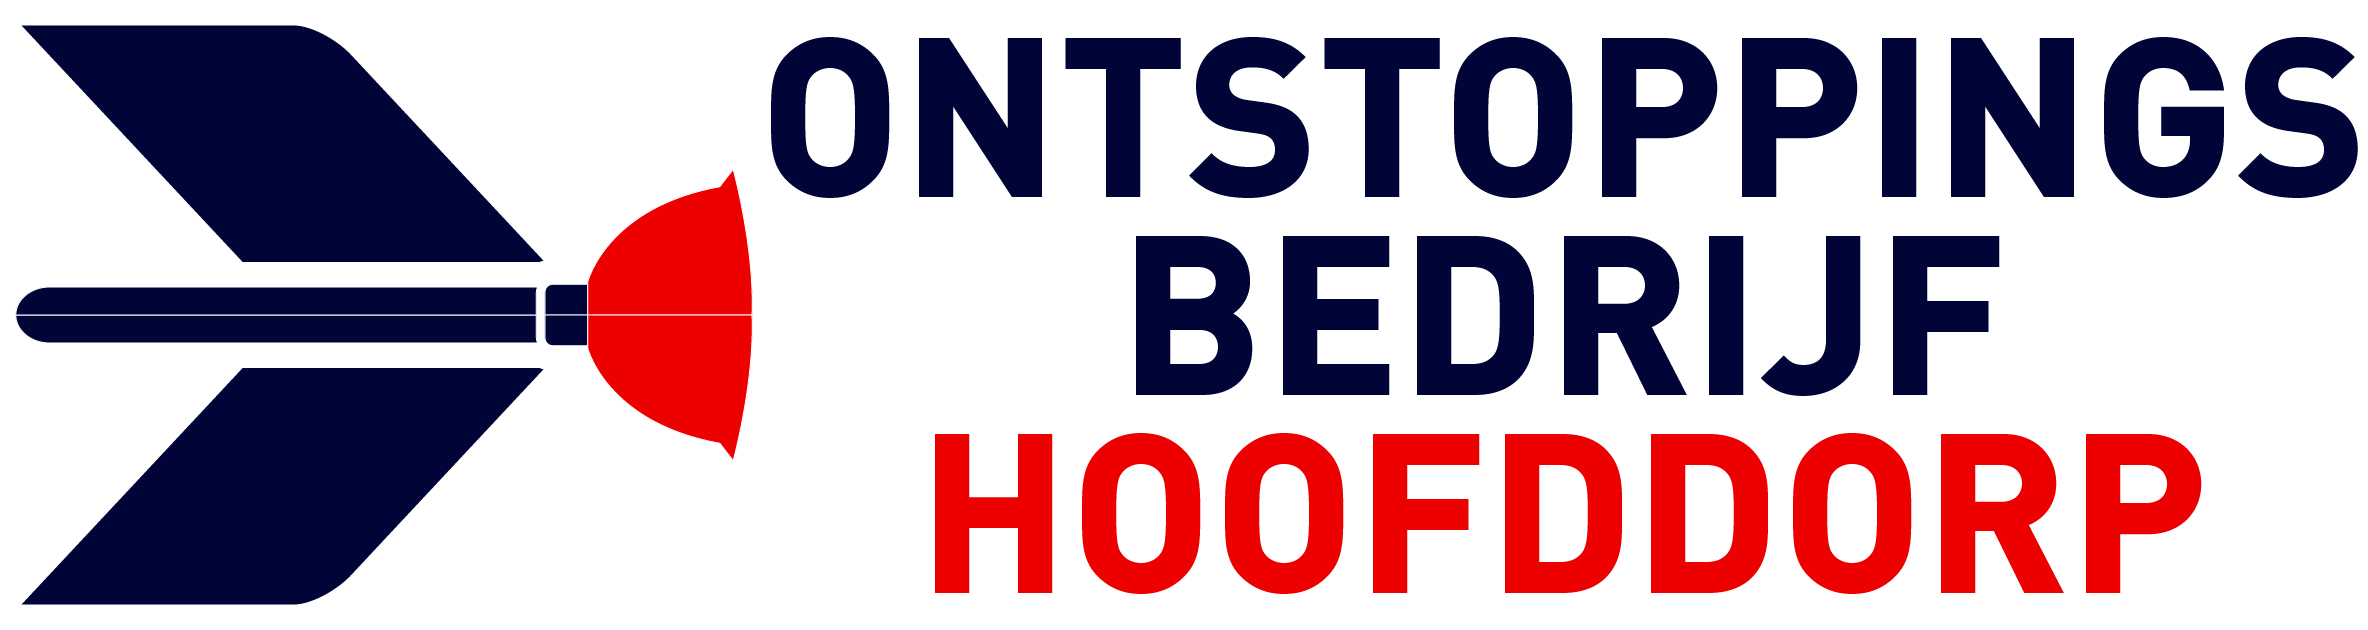 Ontstoppingsbedrijf Hoofddorp logo